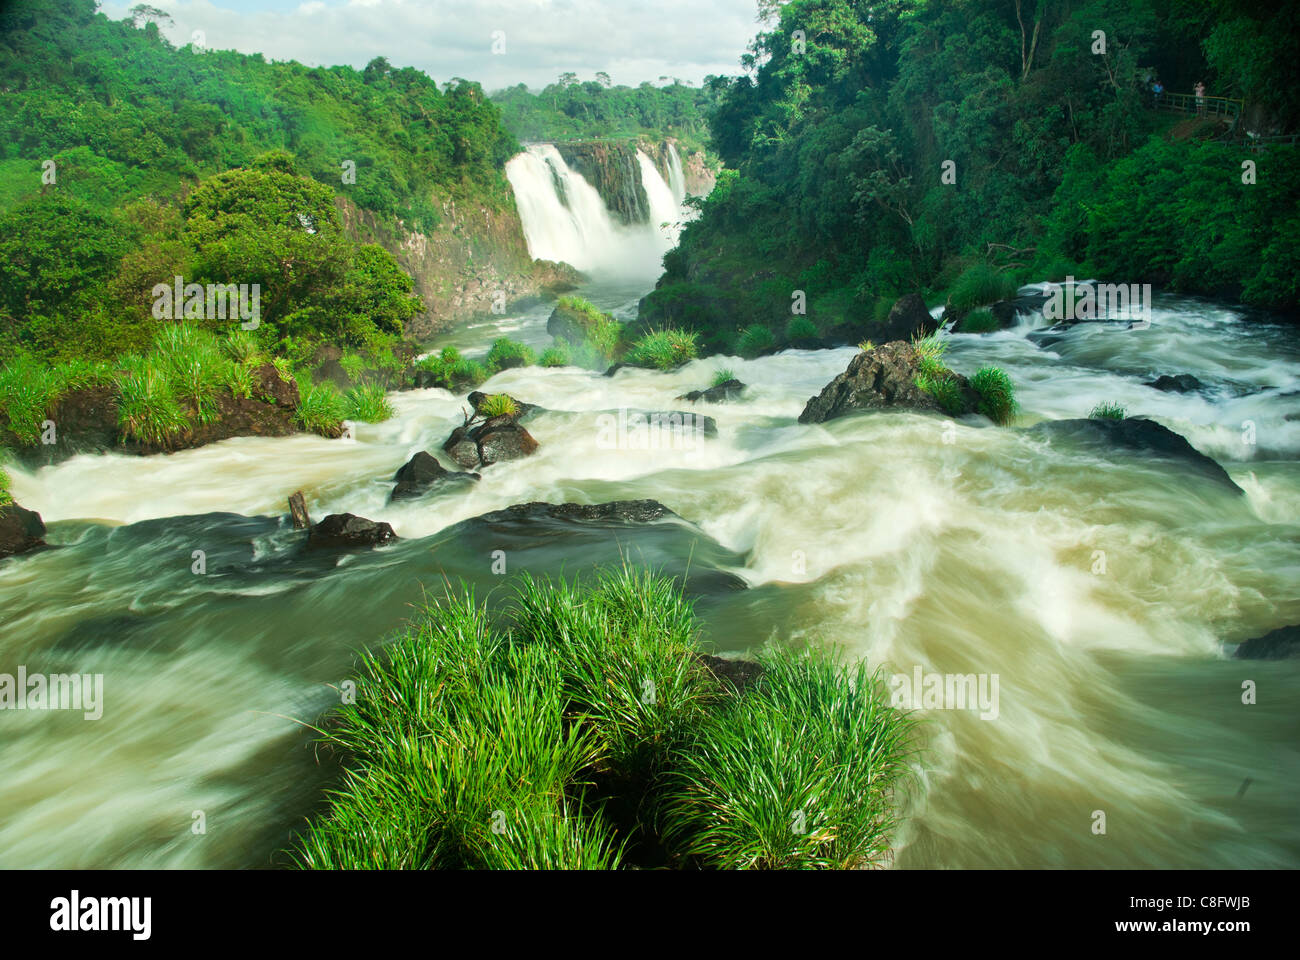 Regardant vers le bas, la rivière Iguazu, chutes d'Iguaçu, Cataratas do Iguaçu, Cataratas del Iguazú. Curitiba, Paraná, Brésil Banque D'Images